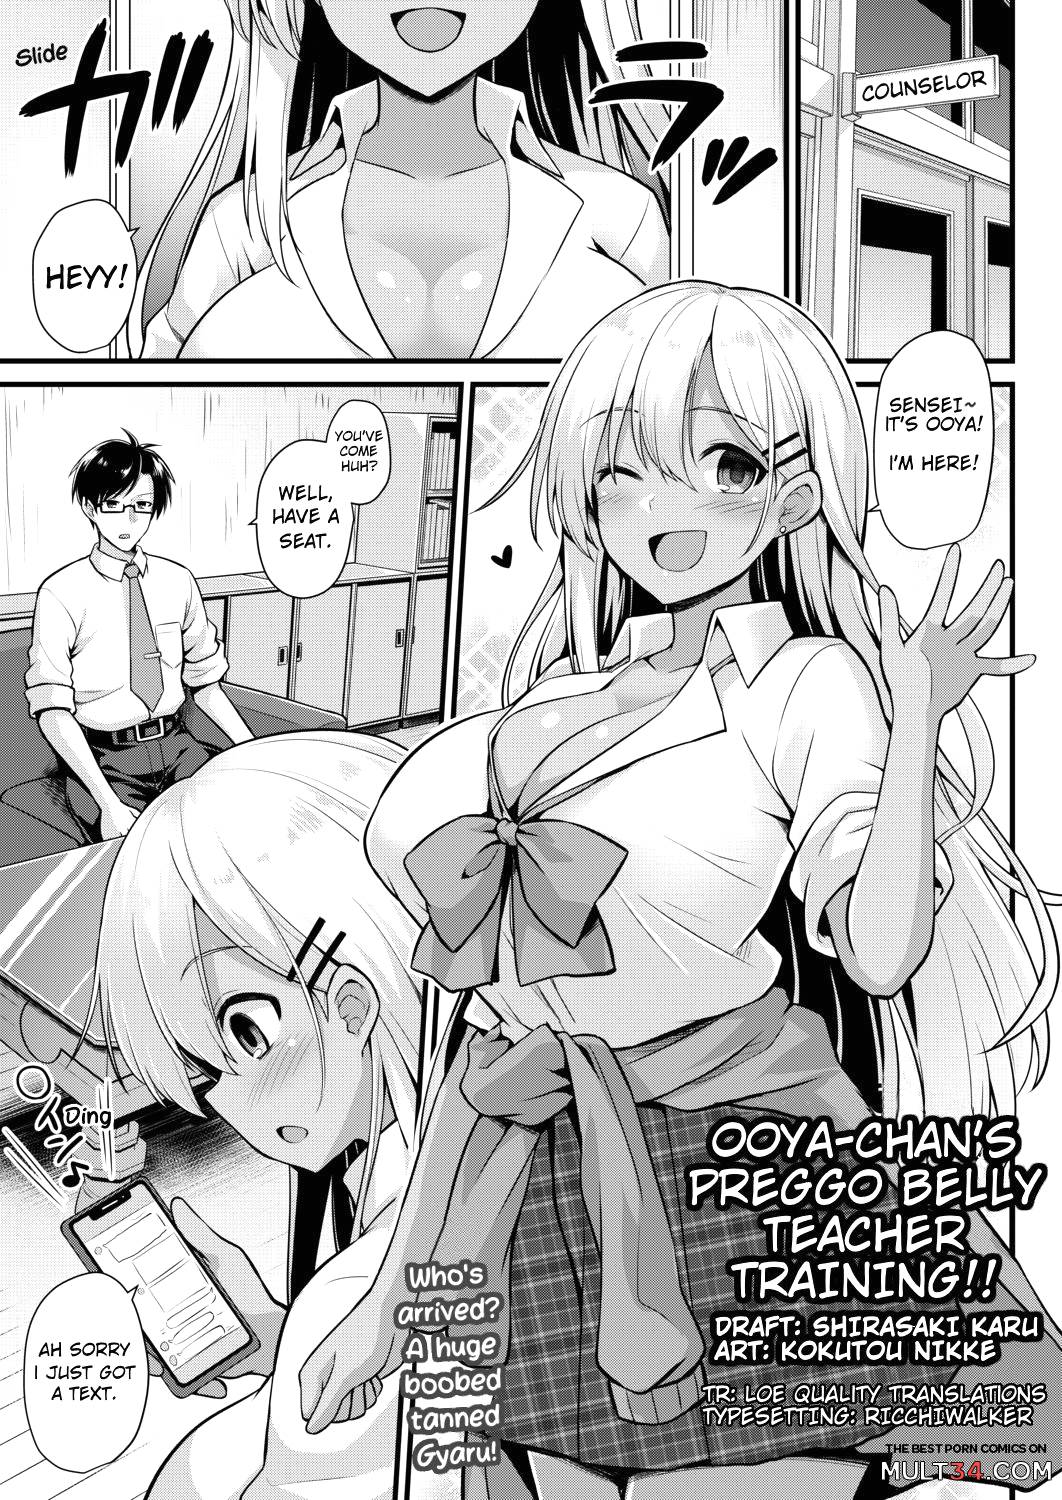 Ooya-chan's Teacher Training page 1